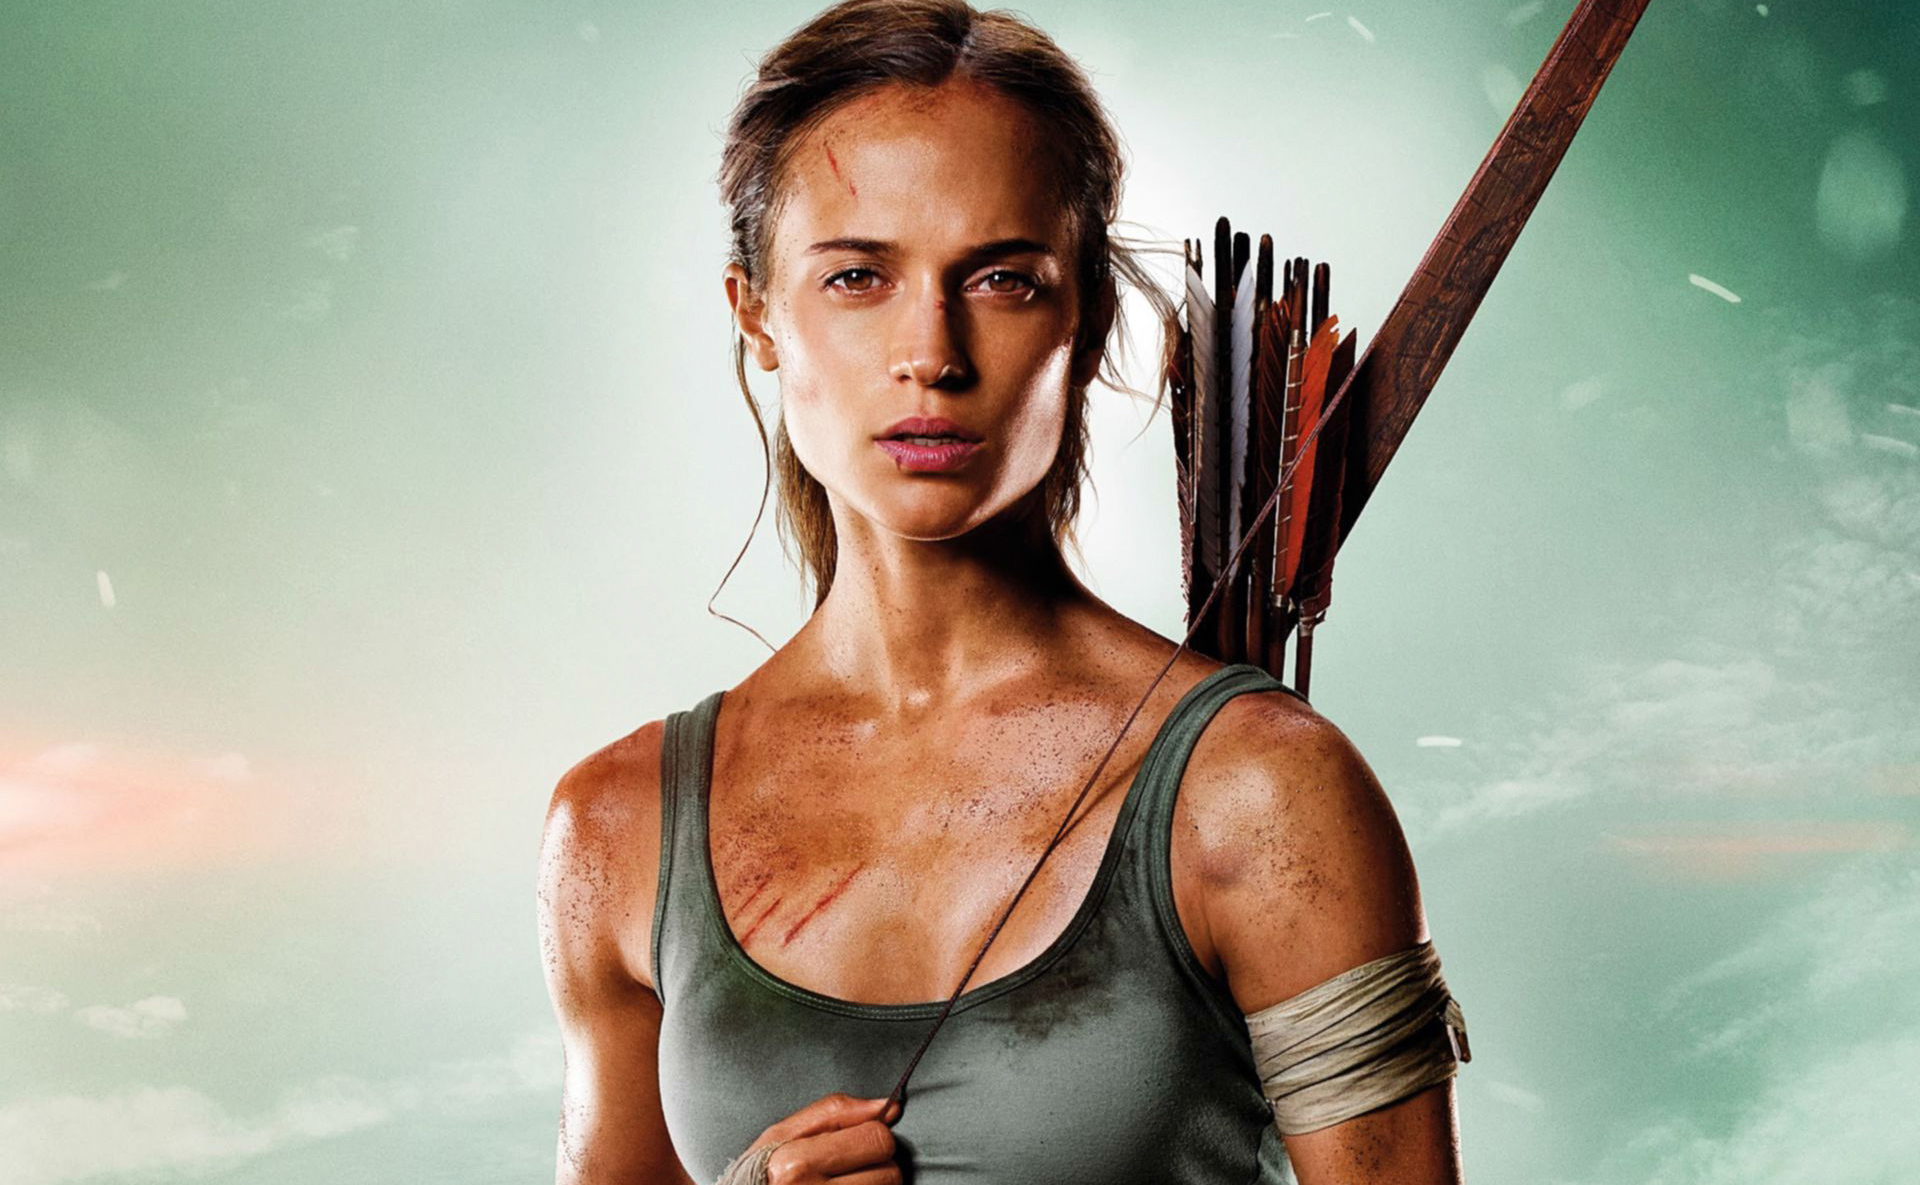 Tomb Raider Alicia Vikander Wallpaper HD Full Pictures